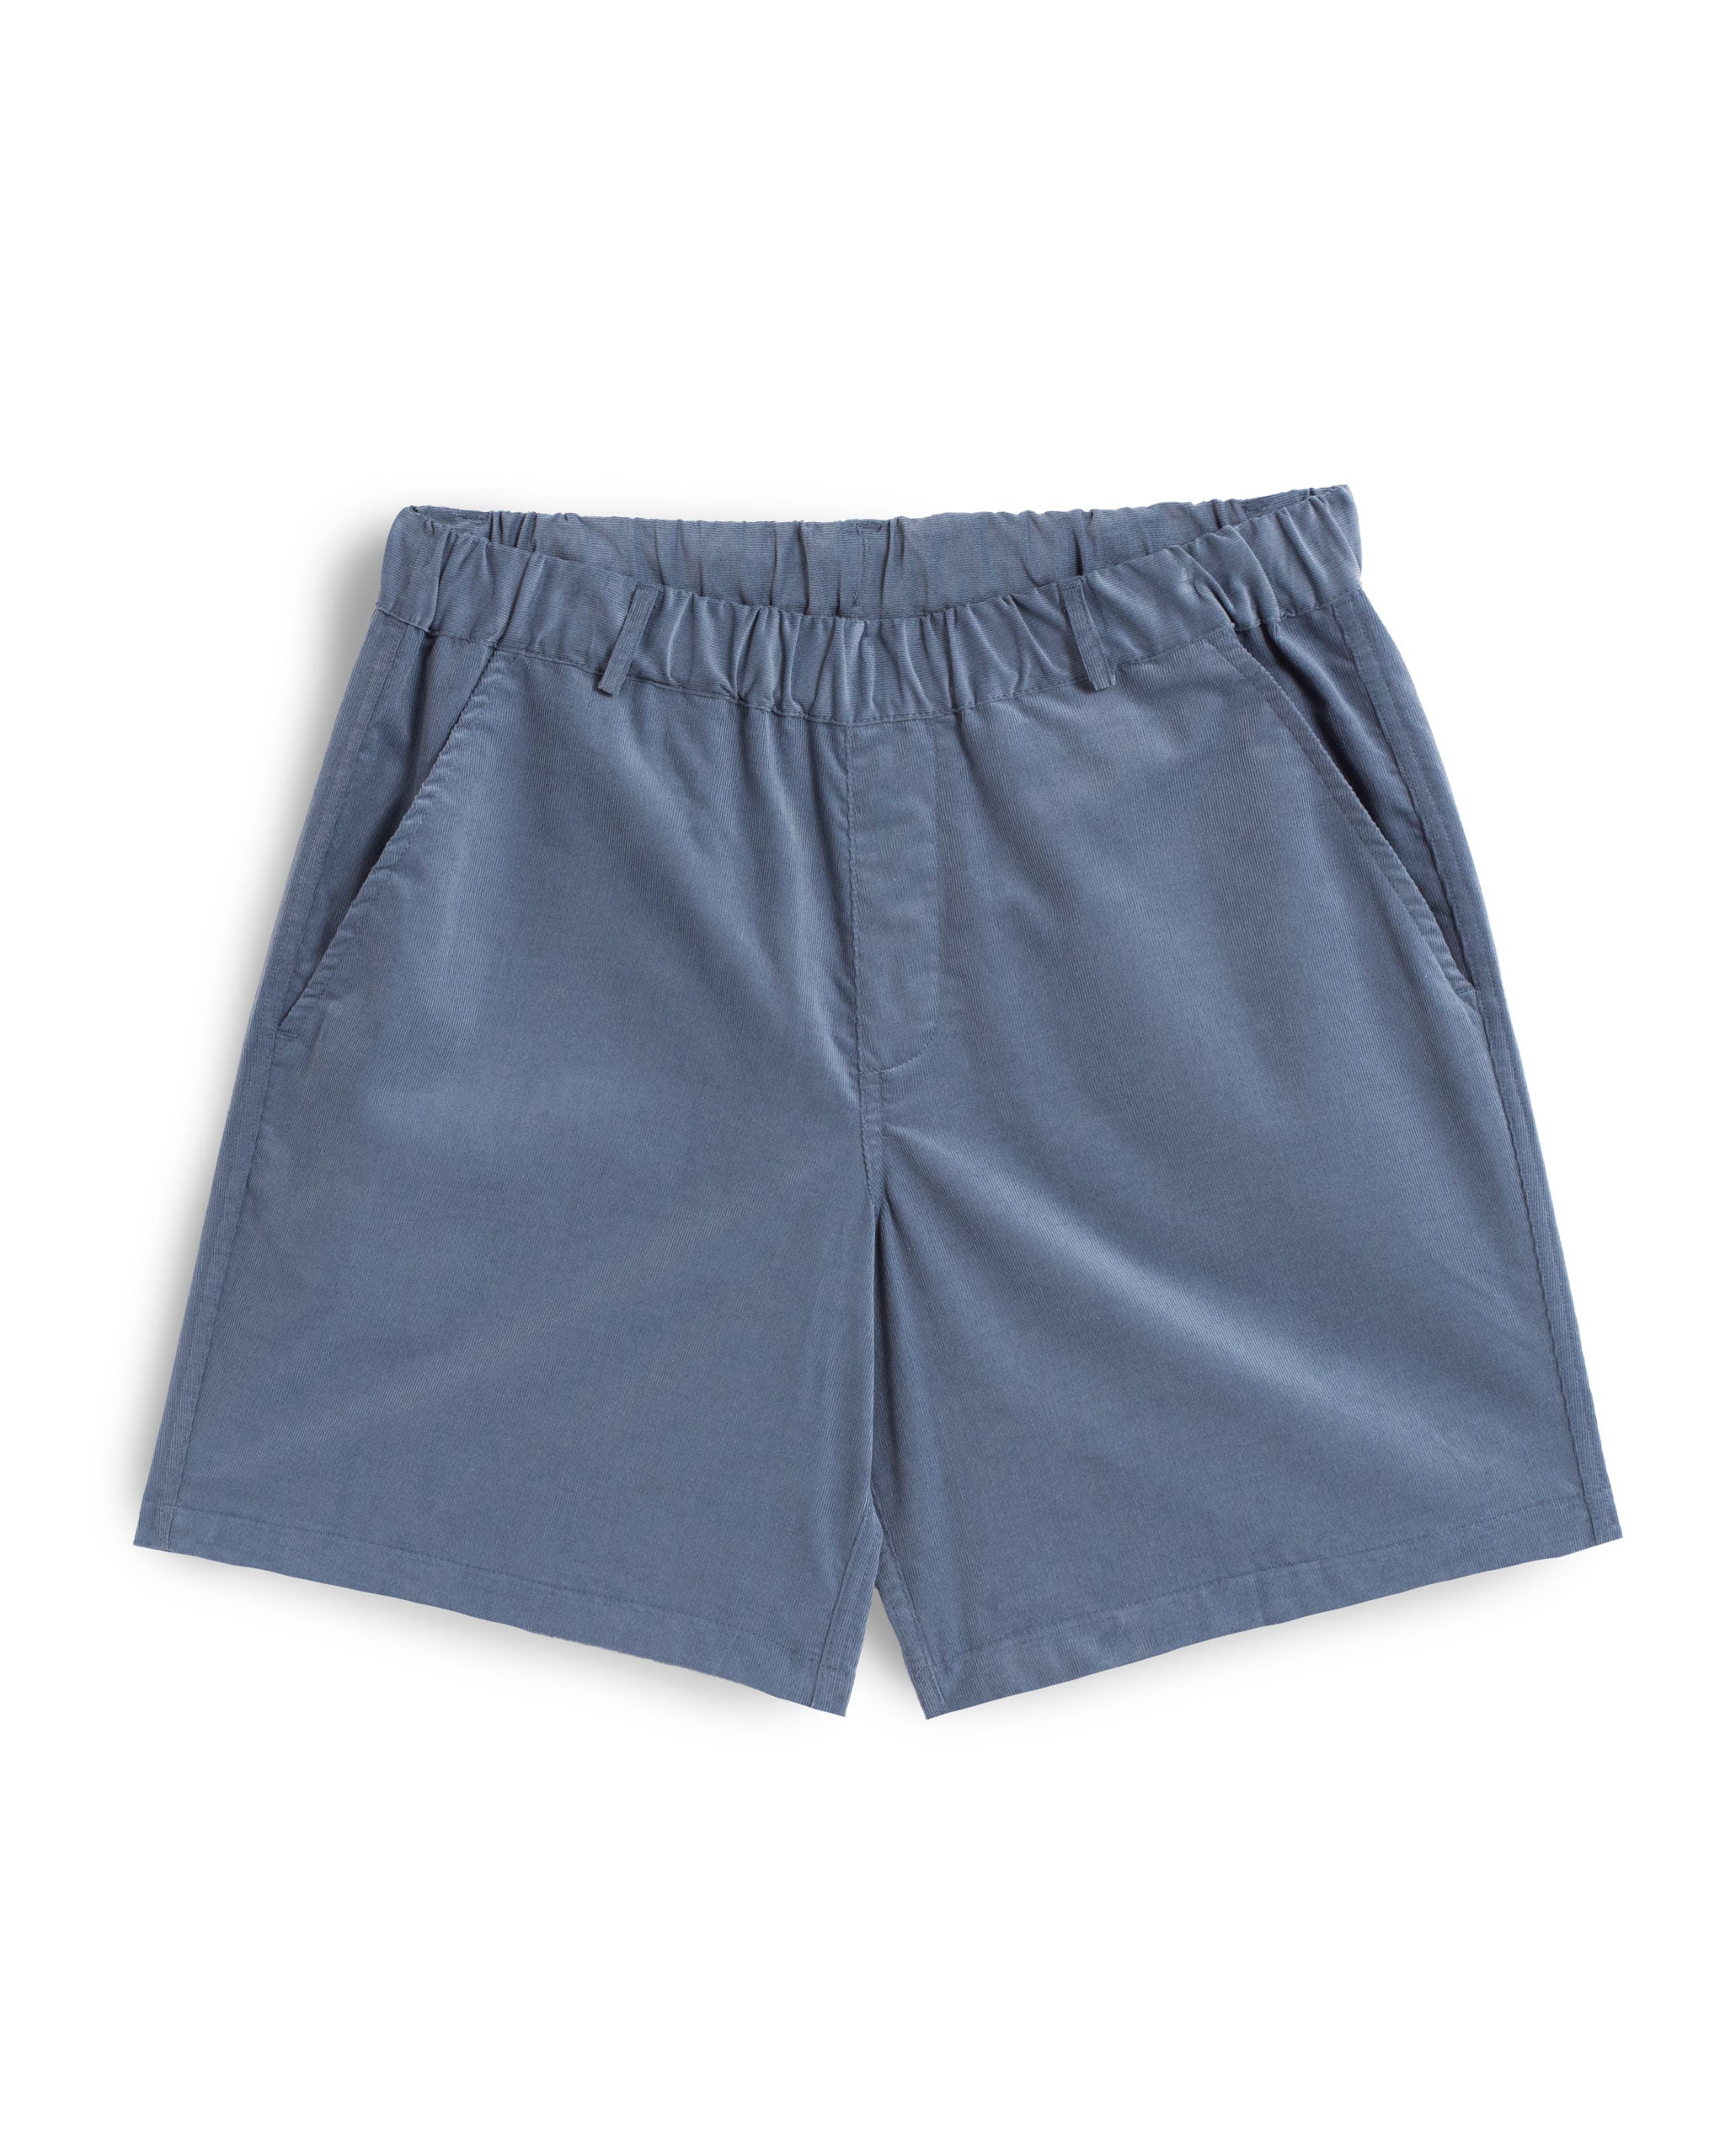 Solid Blue Cotton Corduroy Leisure Shorts